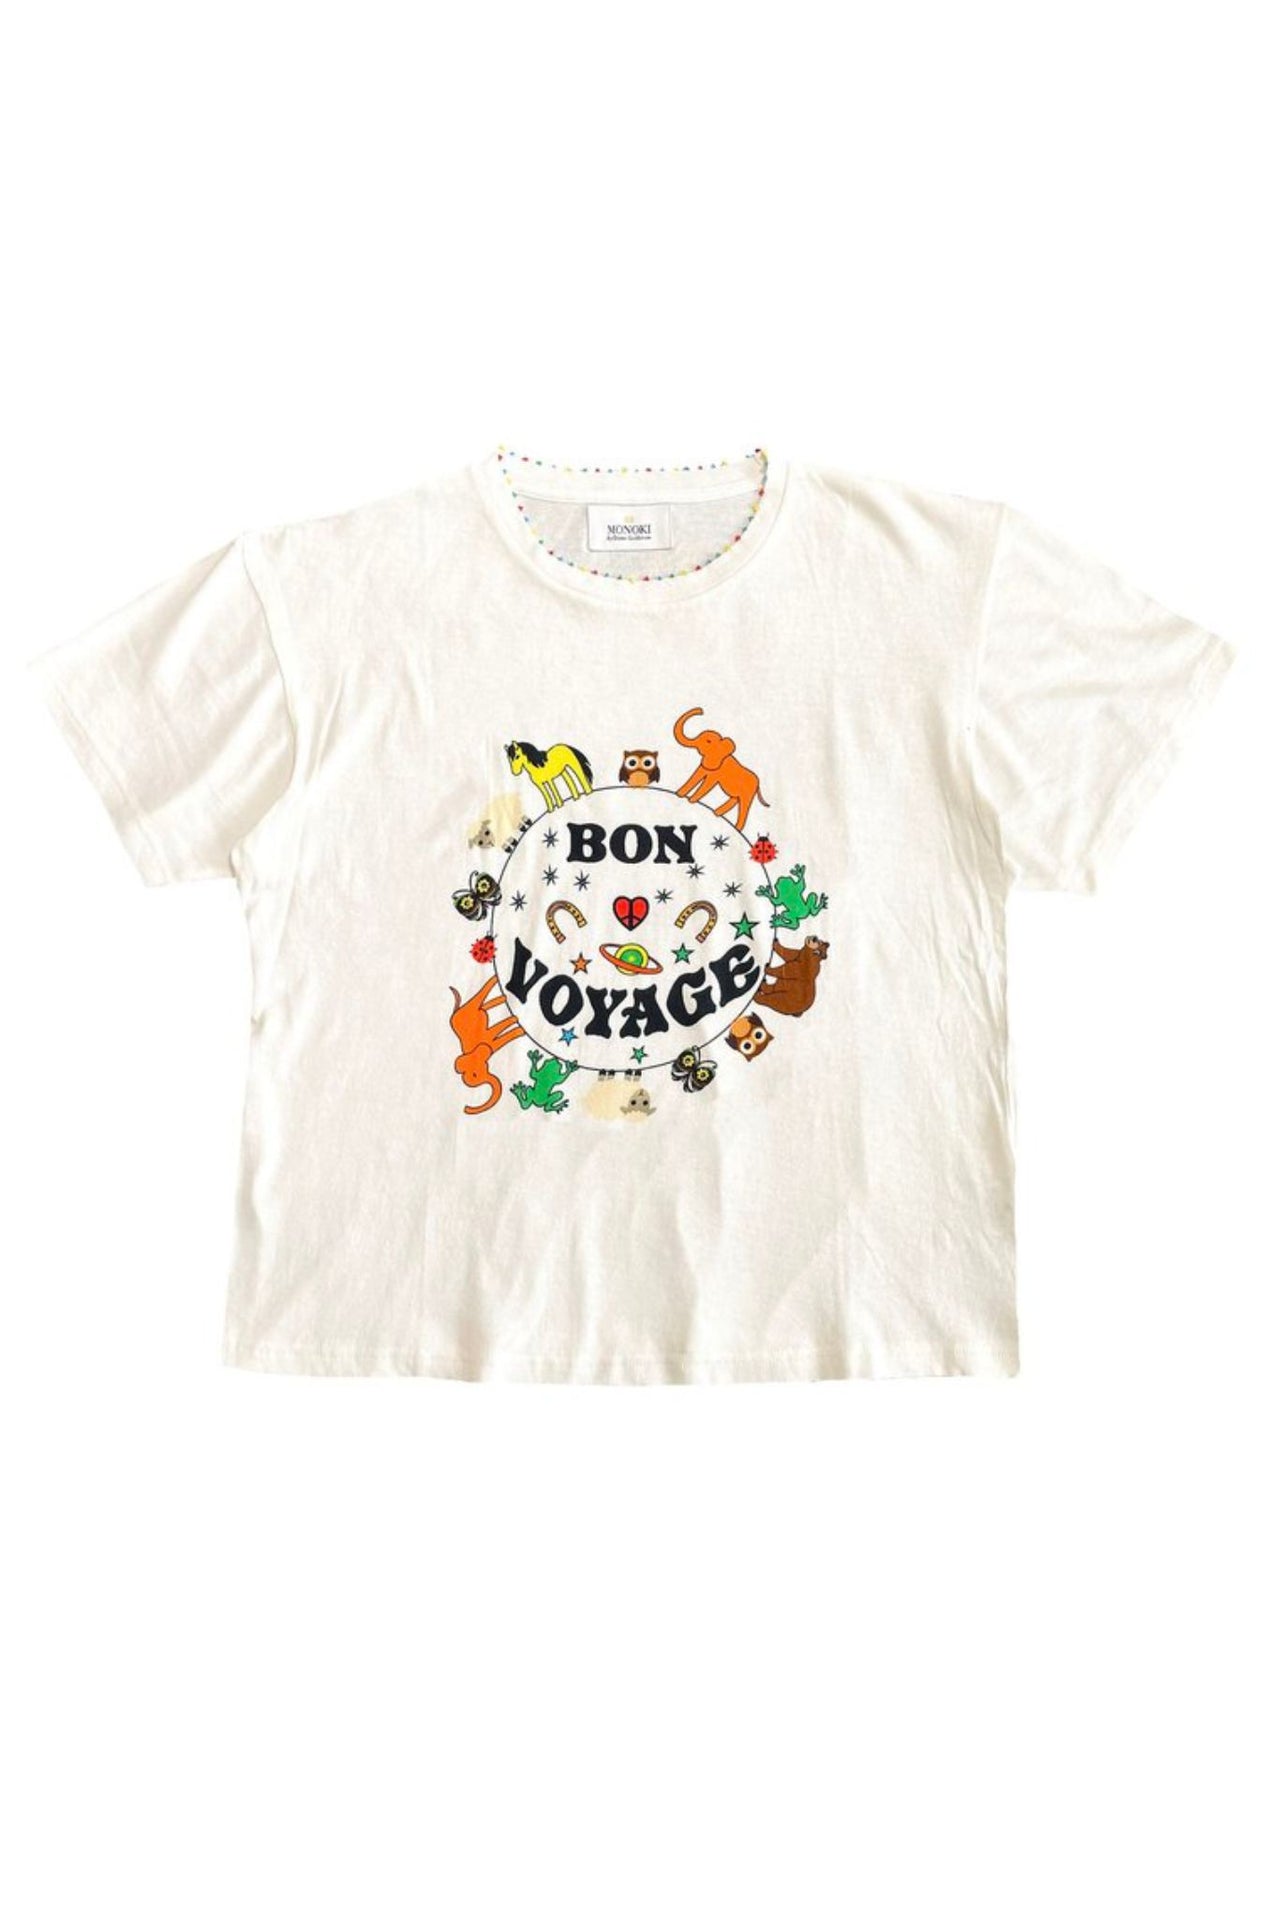 BON VOYAGE TEE SHIRT-T-Shirt-Monoki-Debs Boutique